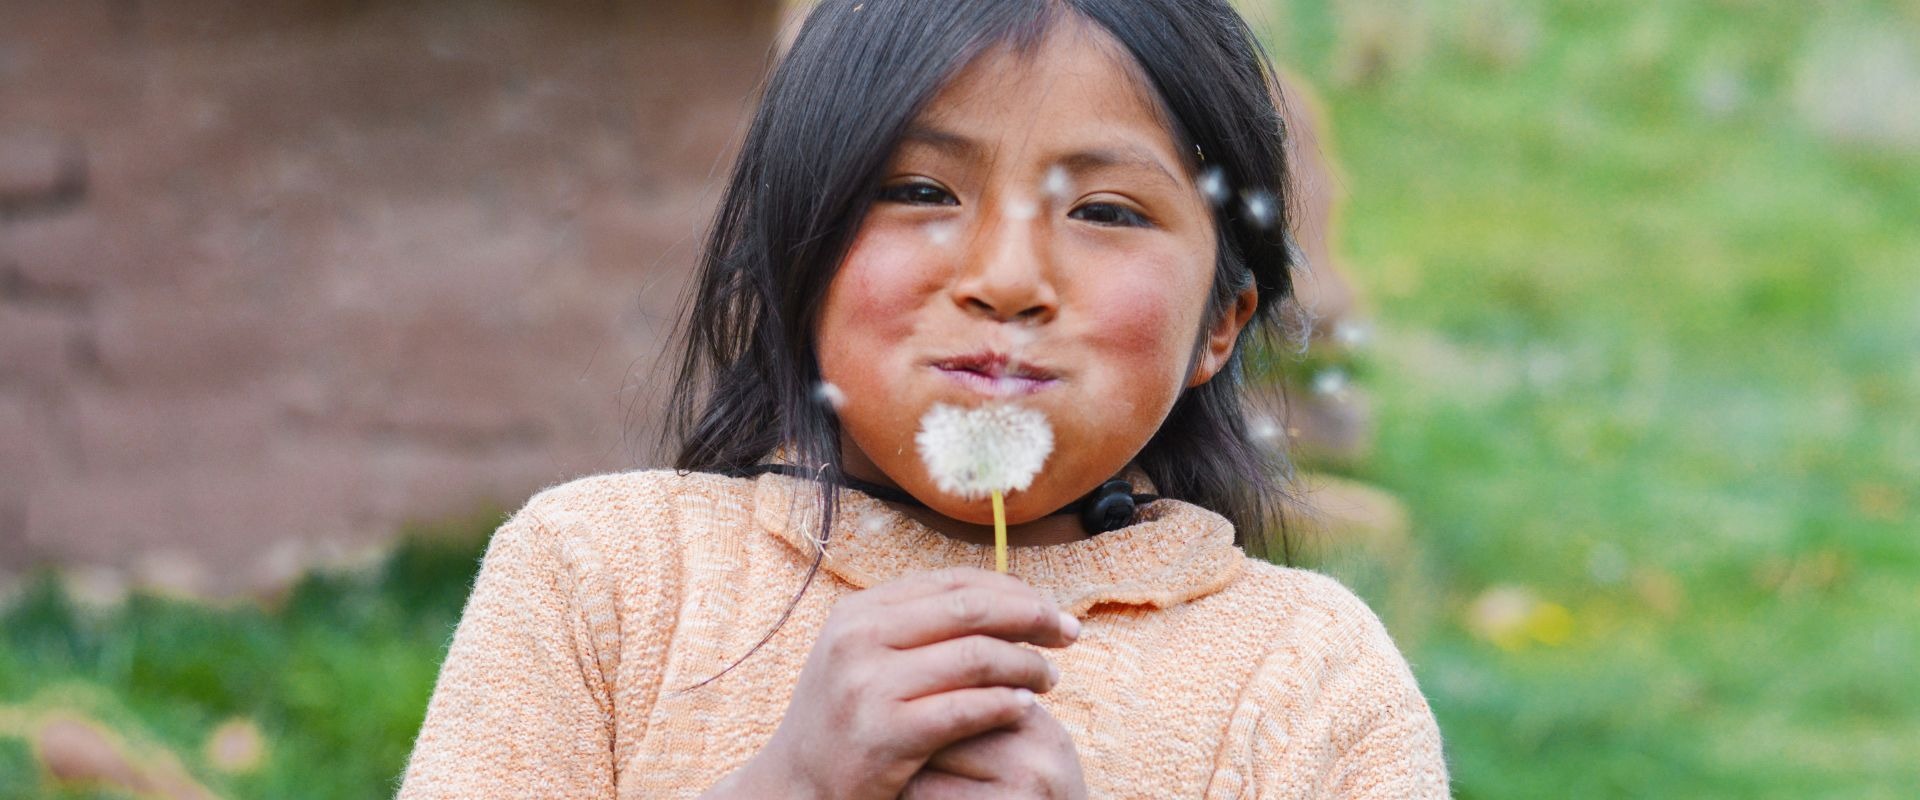 Child blowing dandelion seeds.